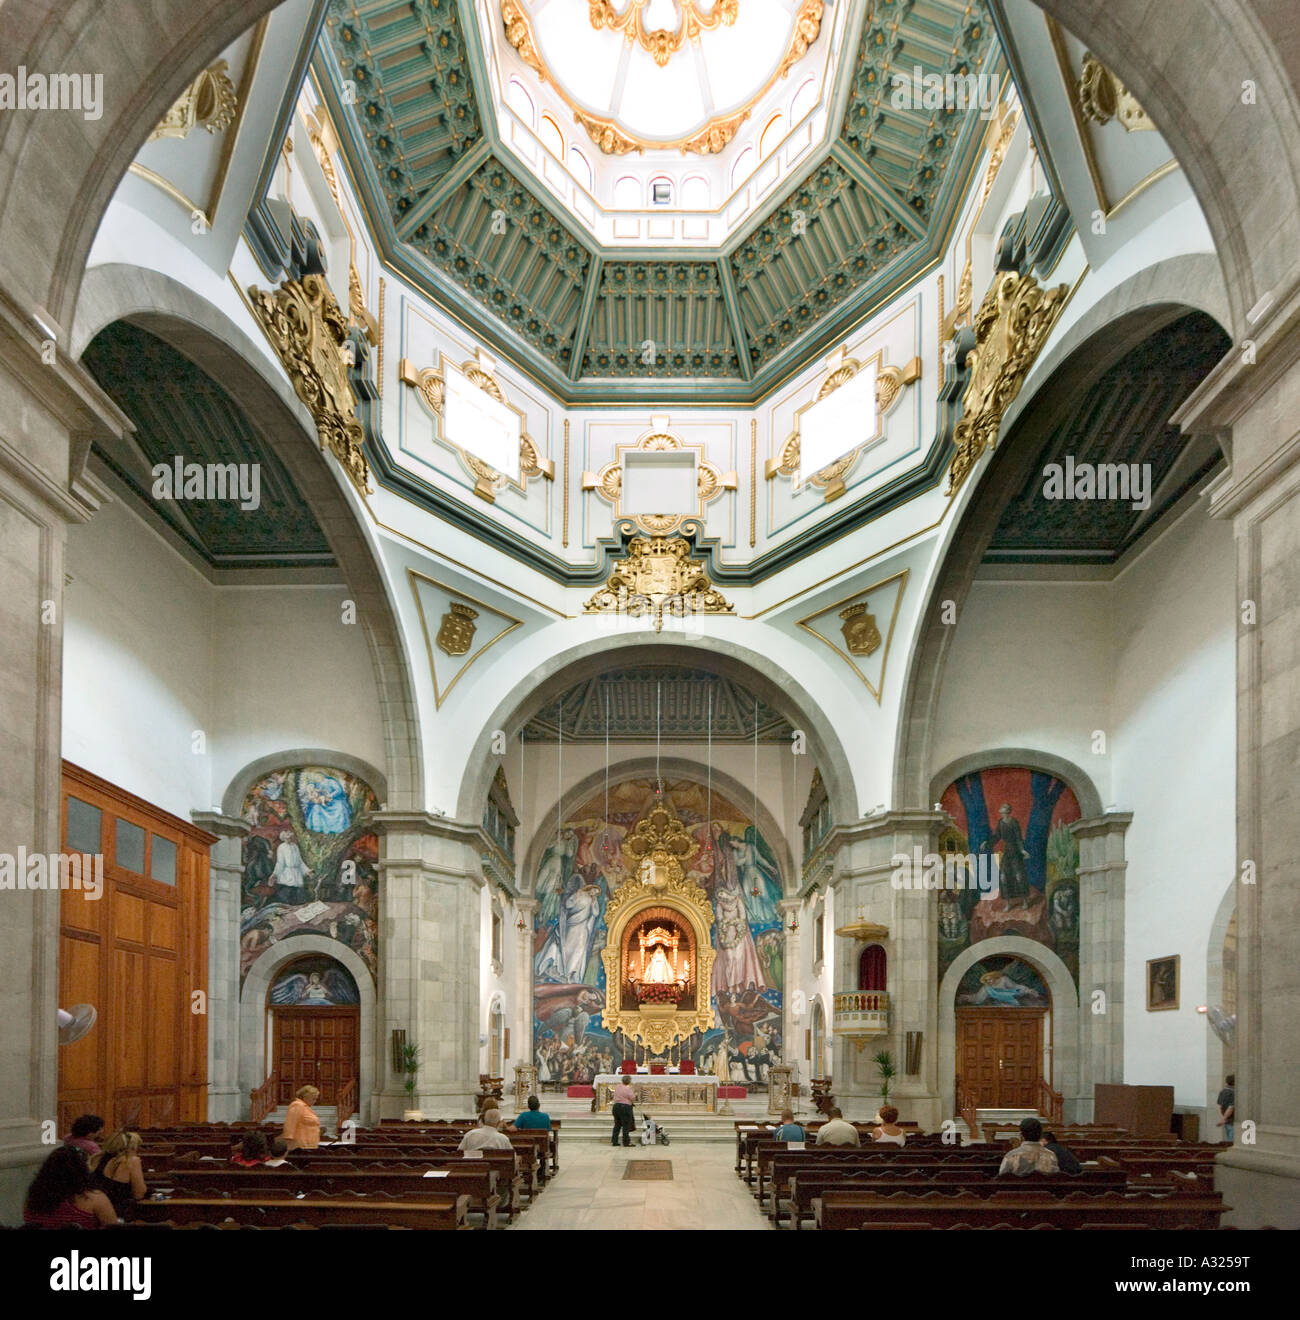 Innenraum der Basilica de Nuestra Senora de Candelaria, Candelaria, Teneriffa, Kanarische Inseln-Spanien Stockfoto